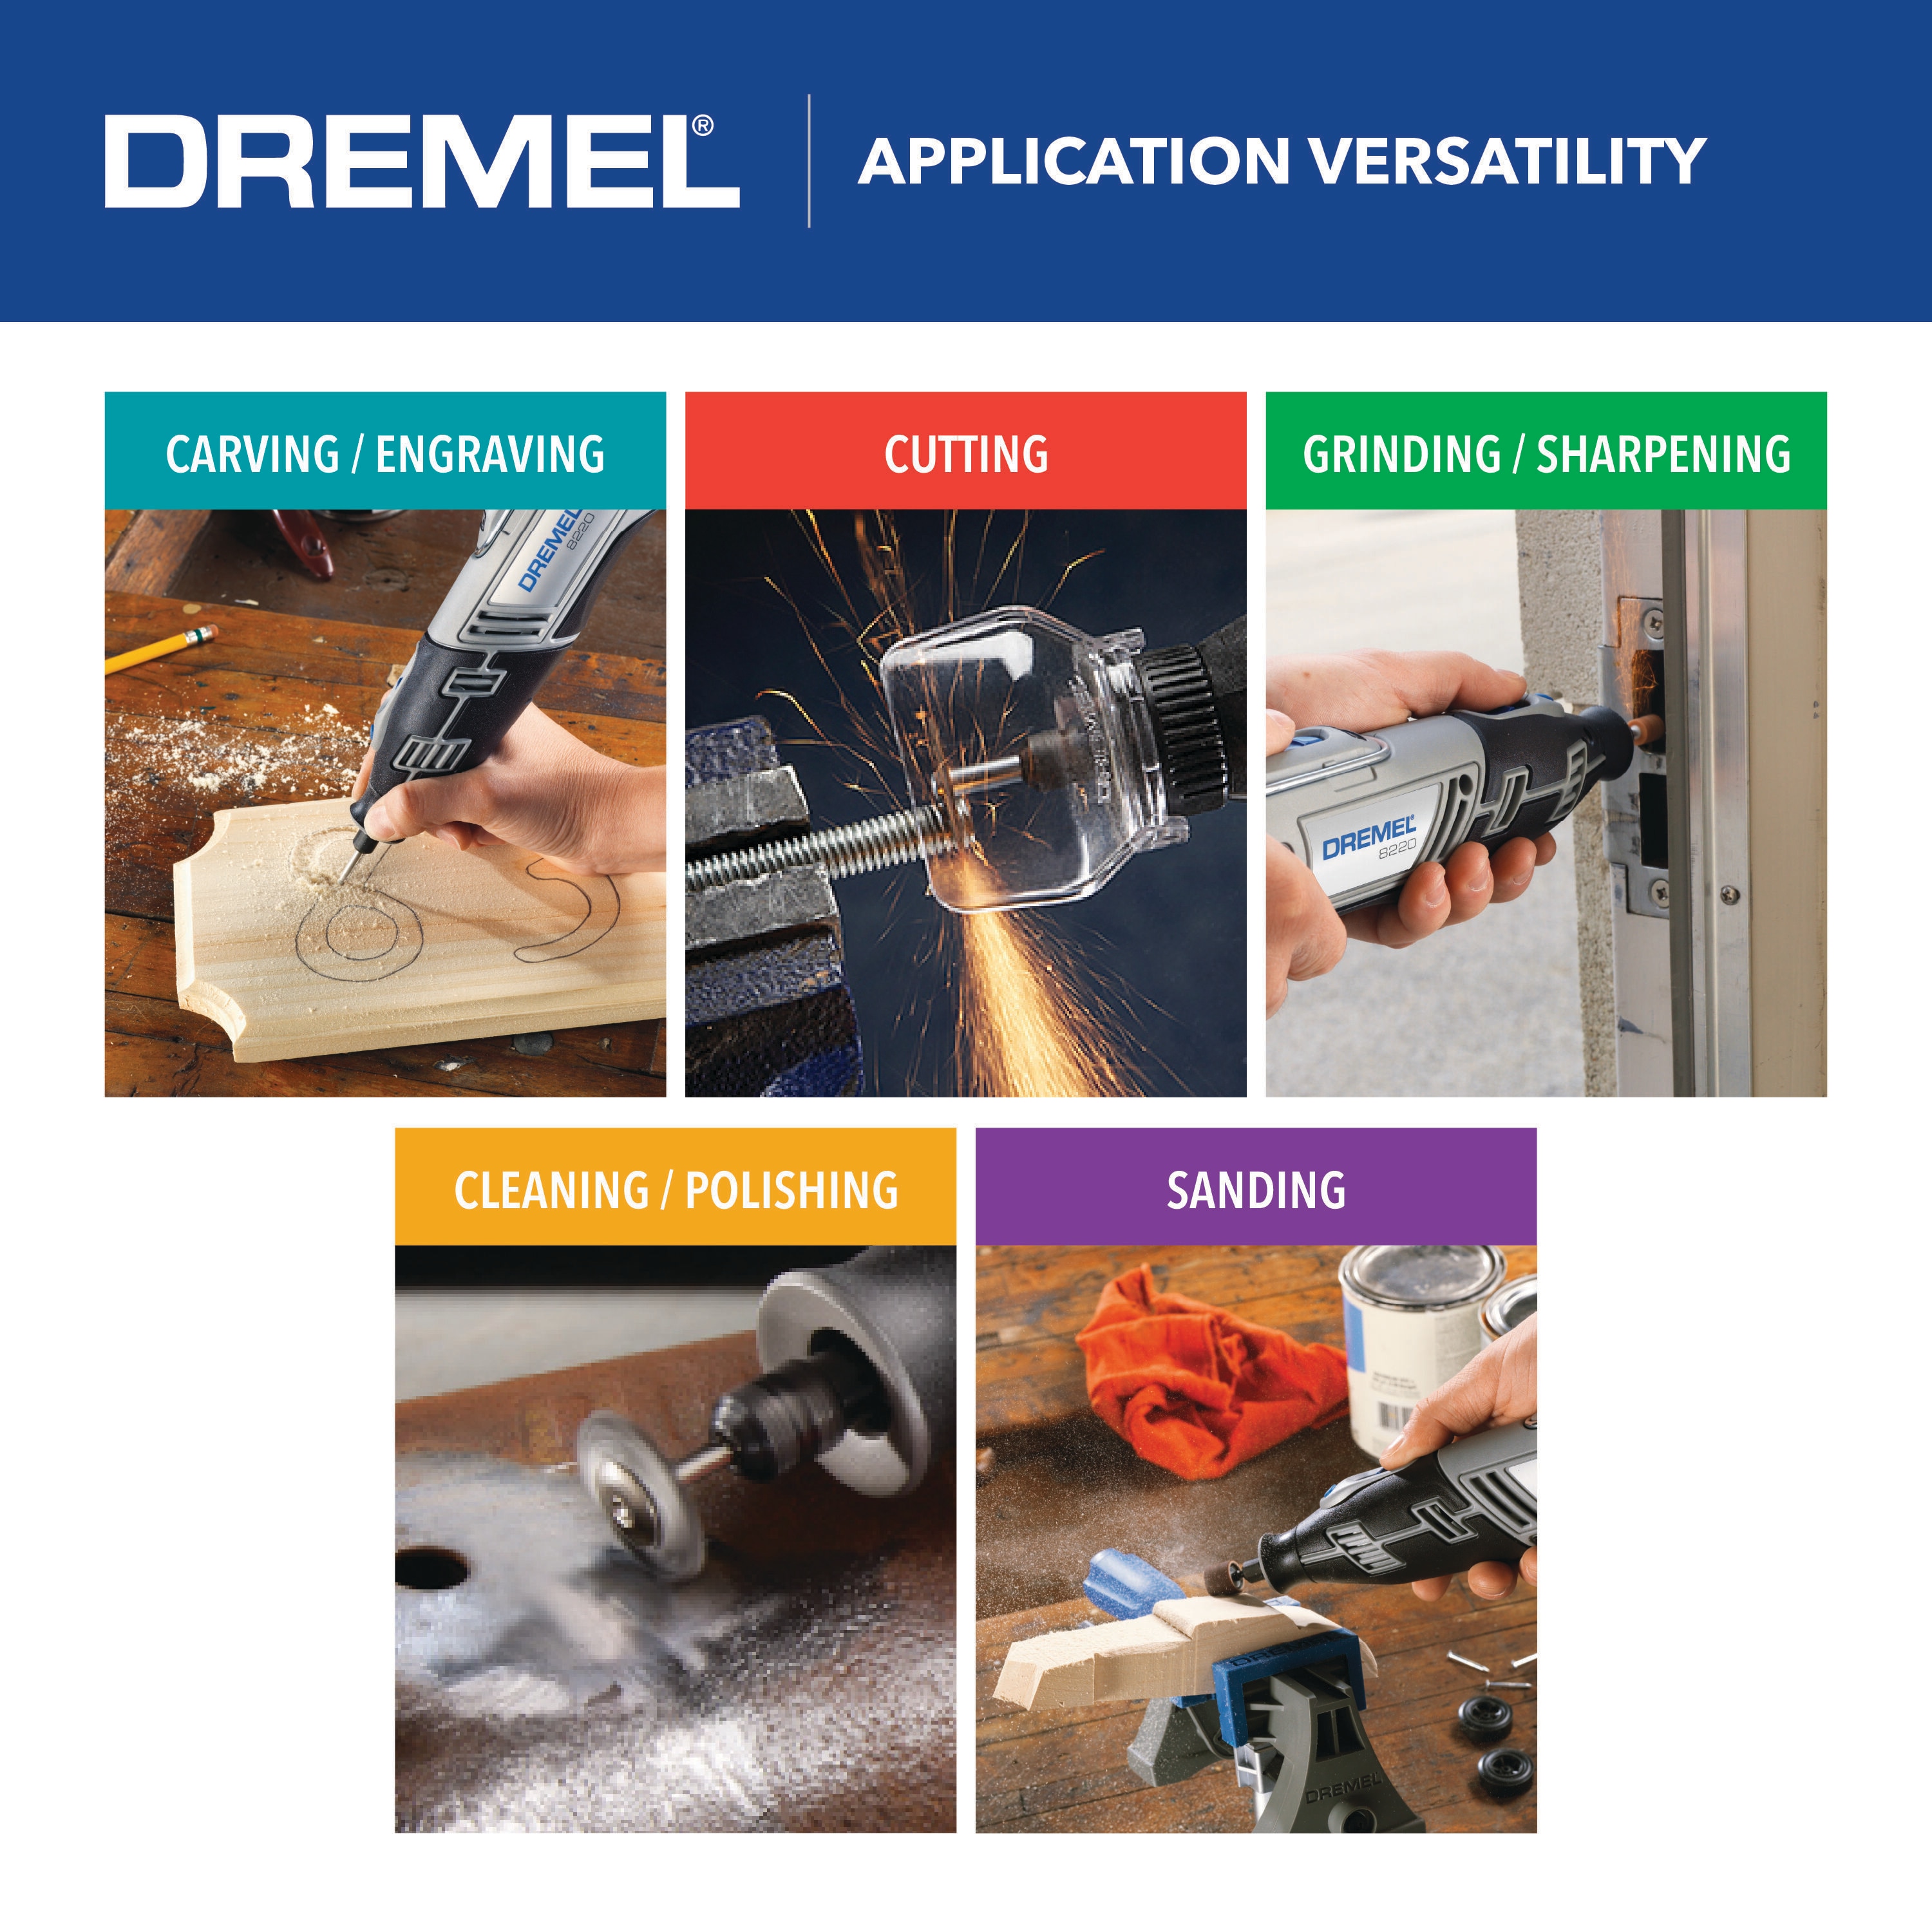 Dremel 8220-1/28 12-Volt Max Cordless Rotary Tool